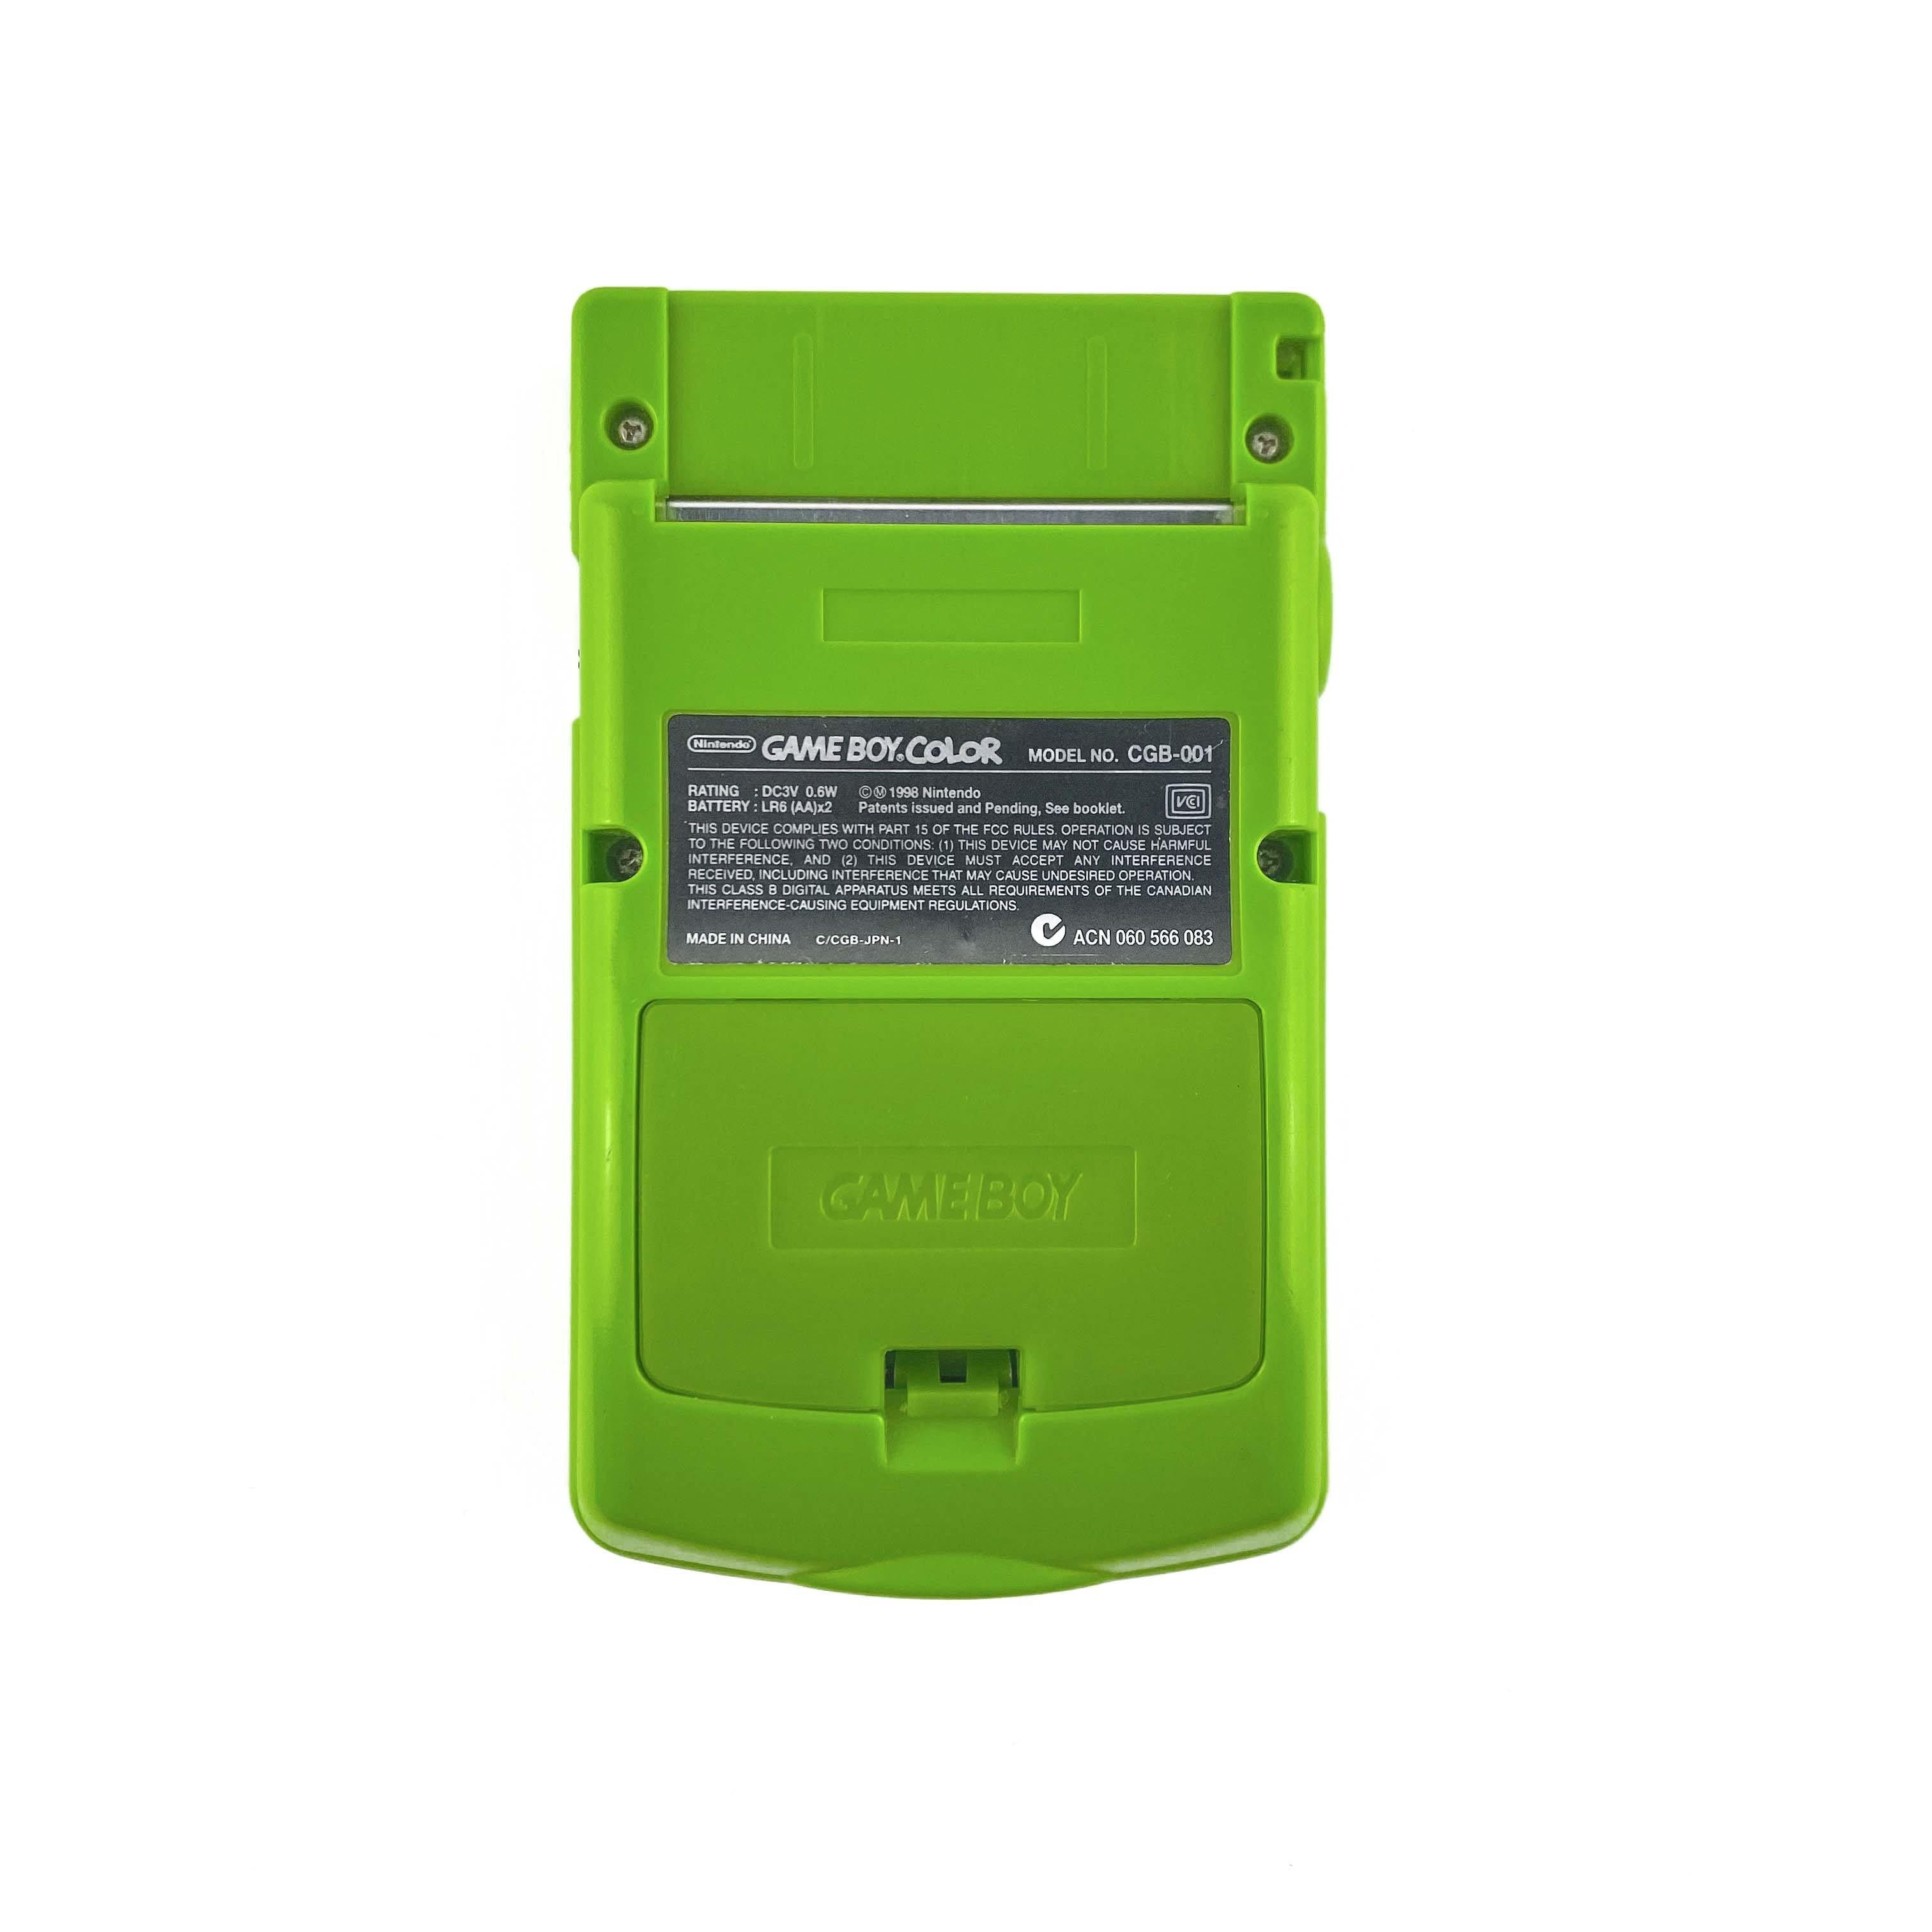 Nintendo Game Boy Color GBC Kiwi Green Handheld Console (CGB-001)